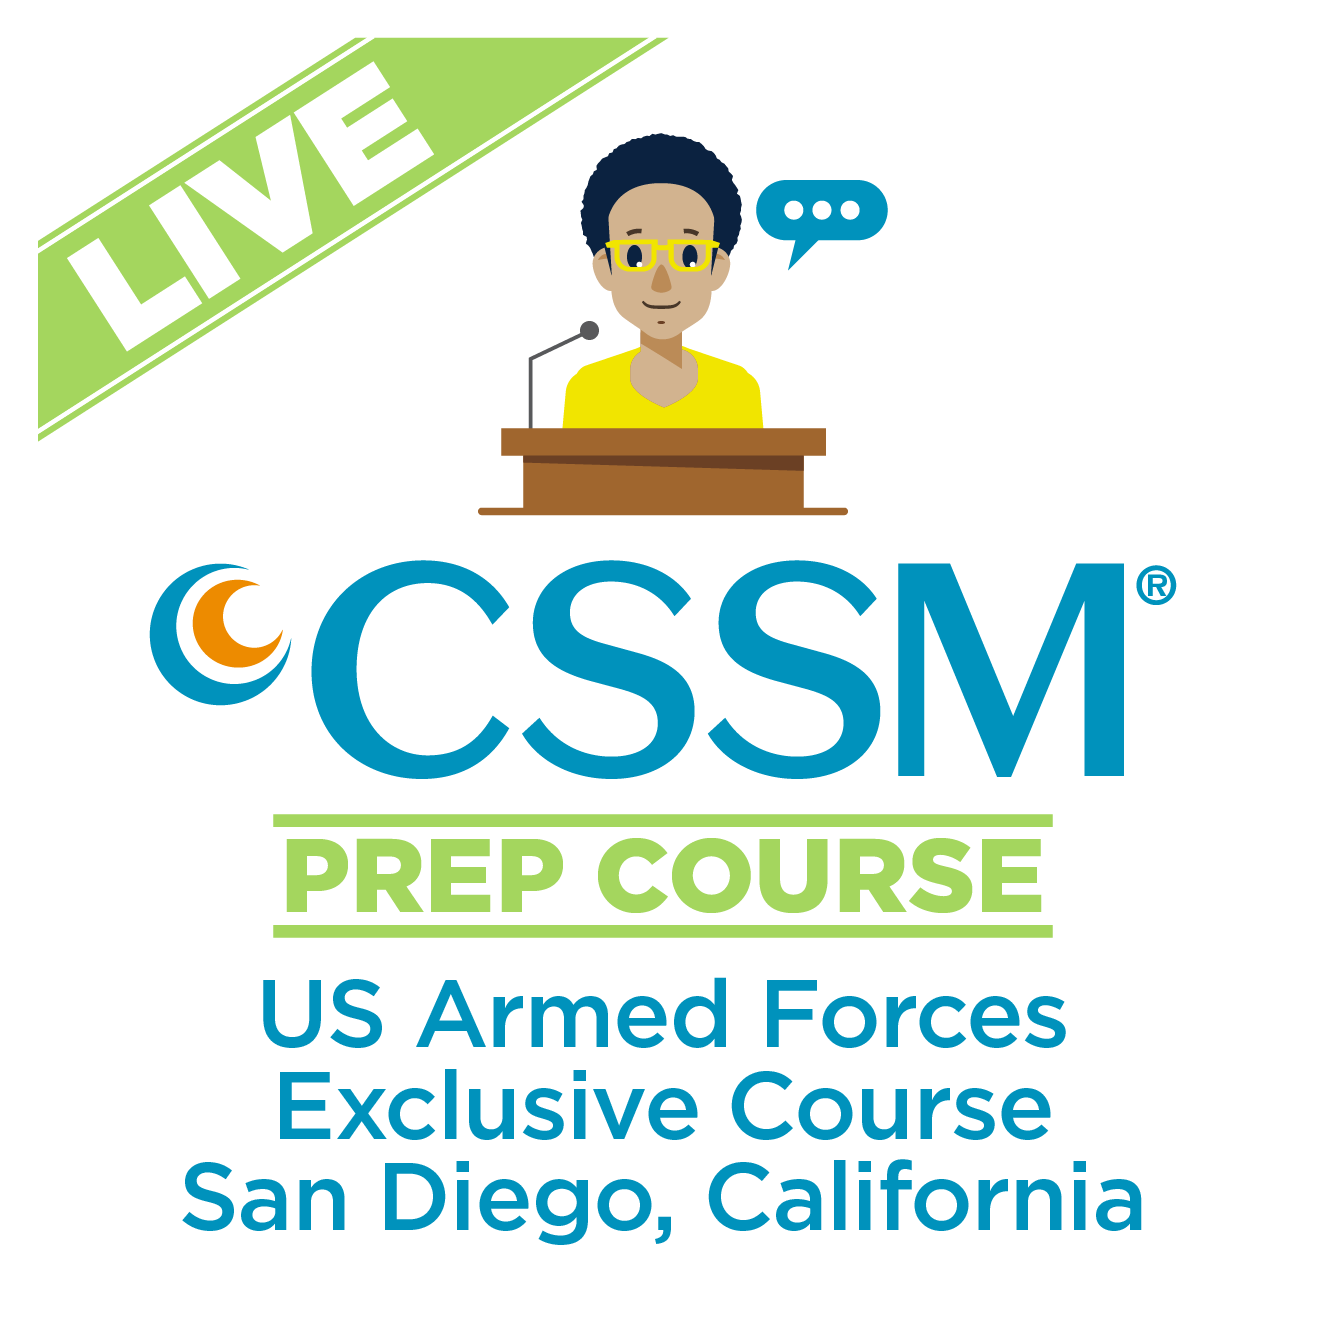 CSSM Live Prep Course - San Diego, CA Jan 26-27